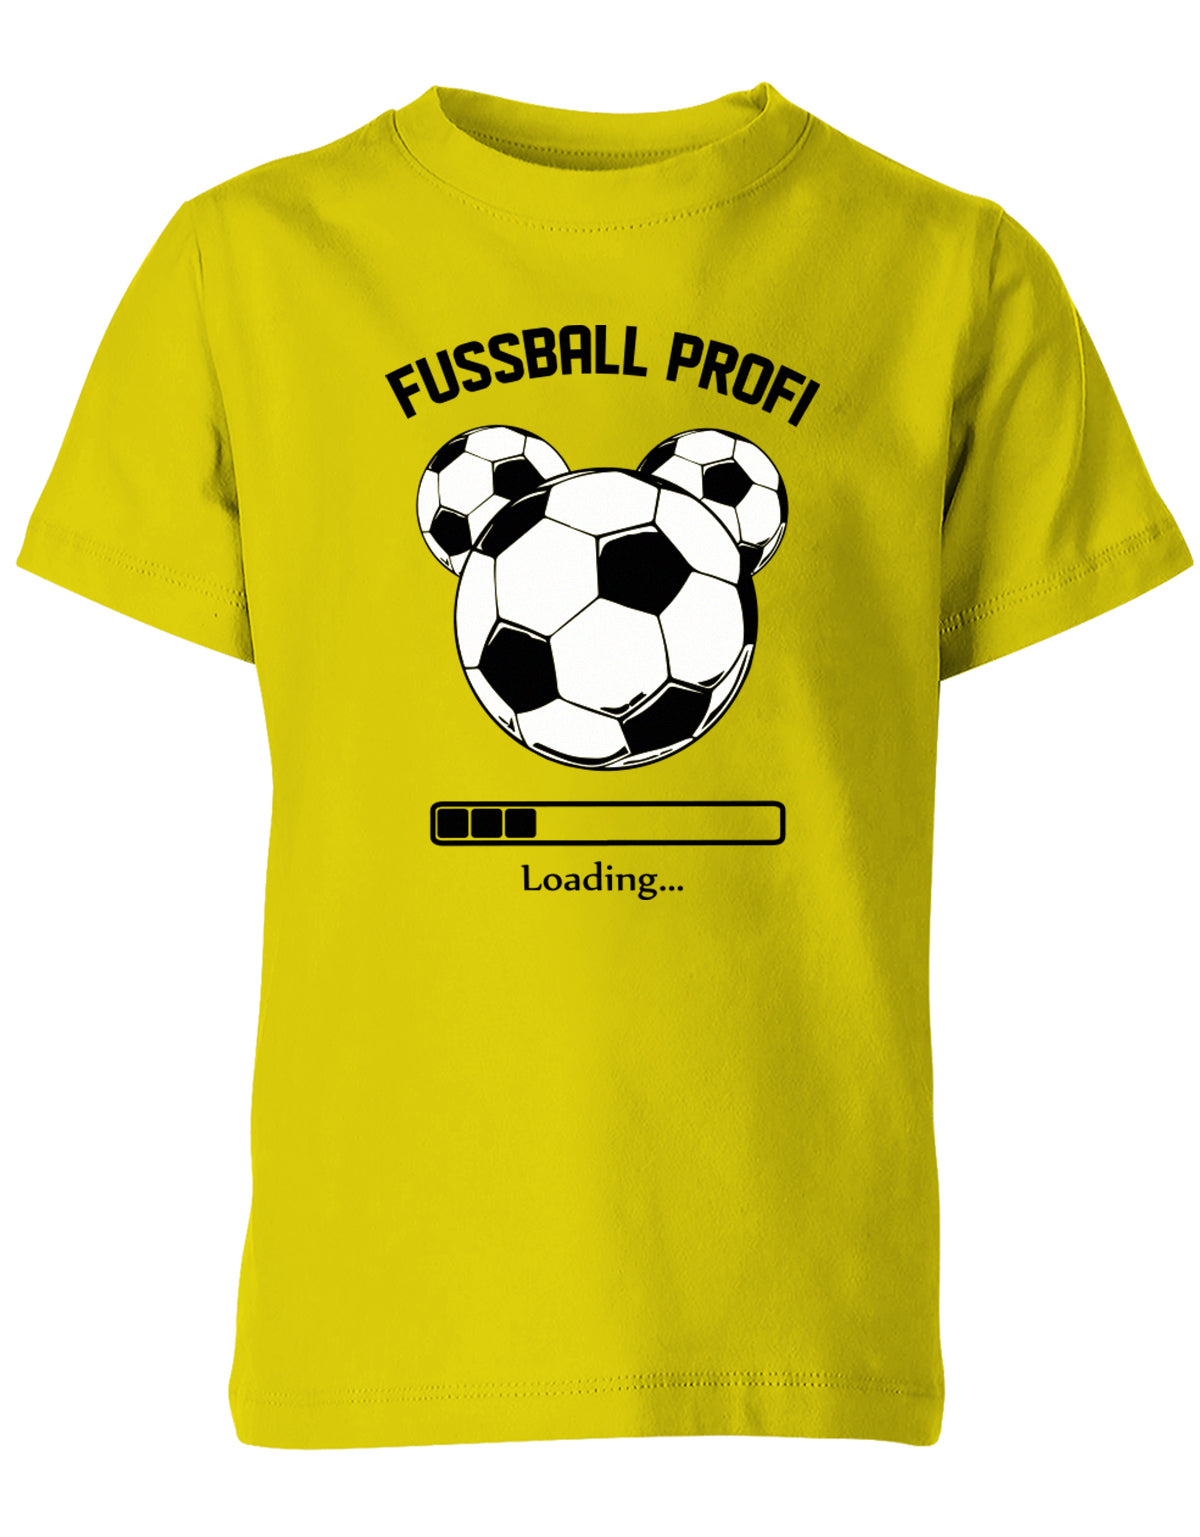 Fussball-Profi-Kinder-Shirt-Gelb